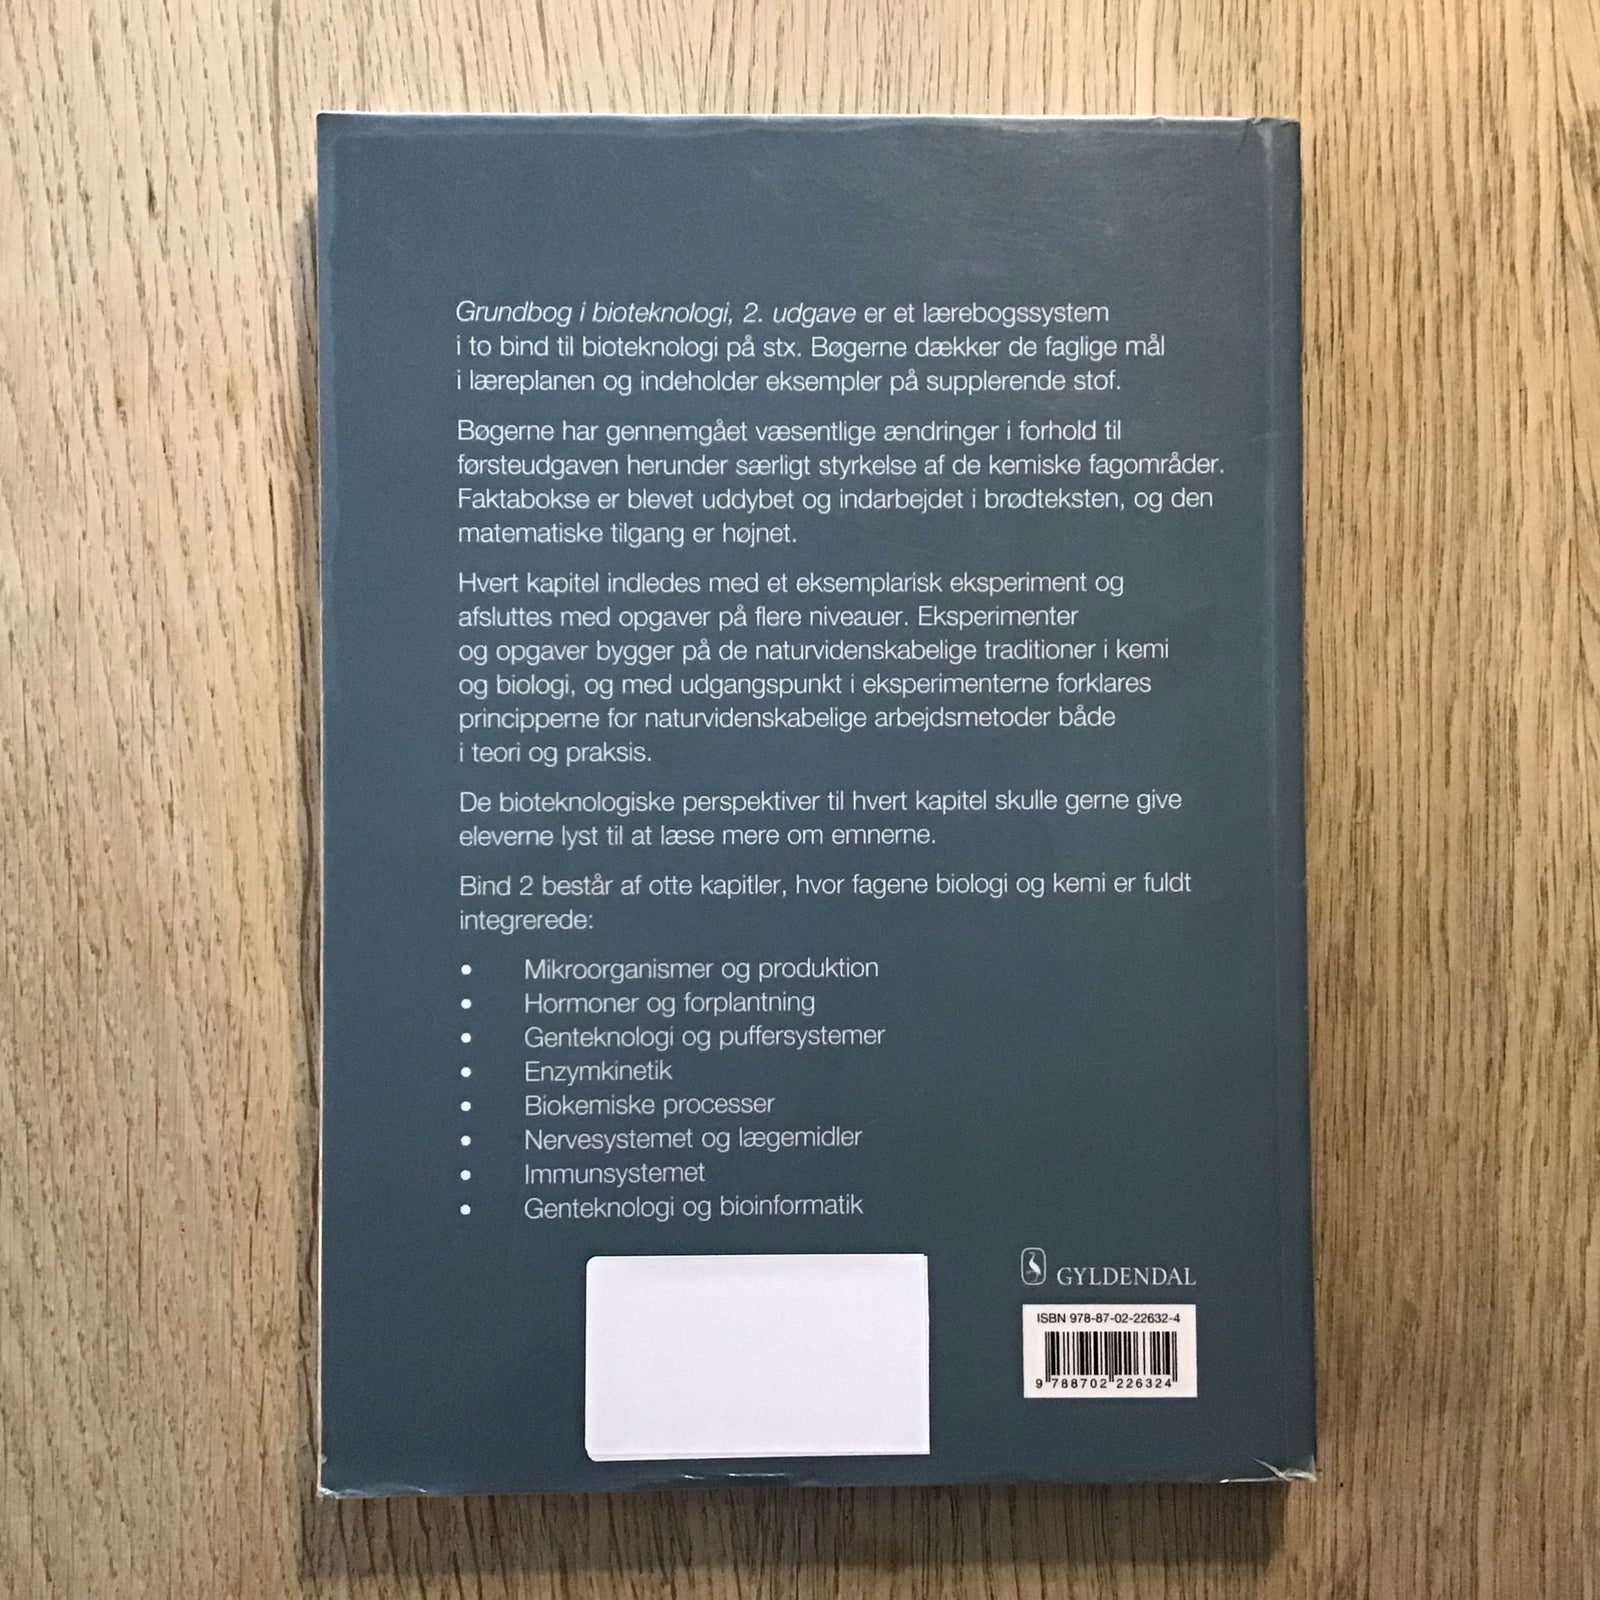 Grundbog i Bioteknologi 2 stx, Kim Bruun m.fl., år 2019